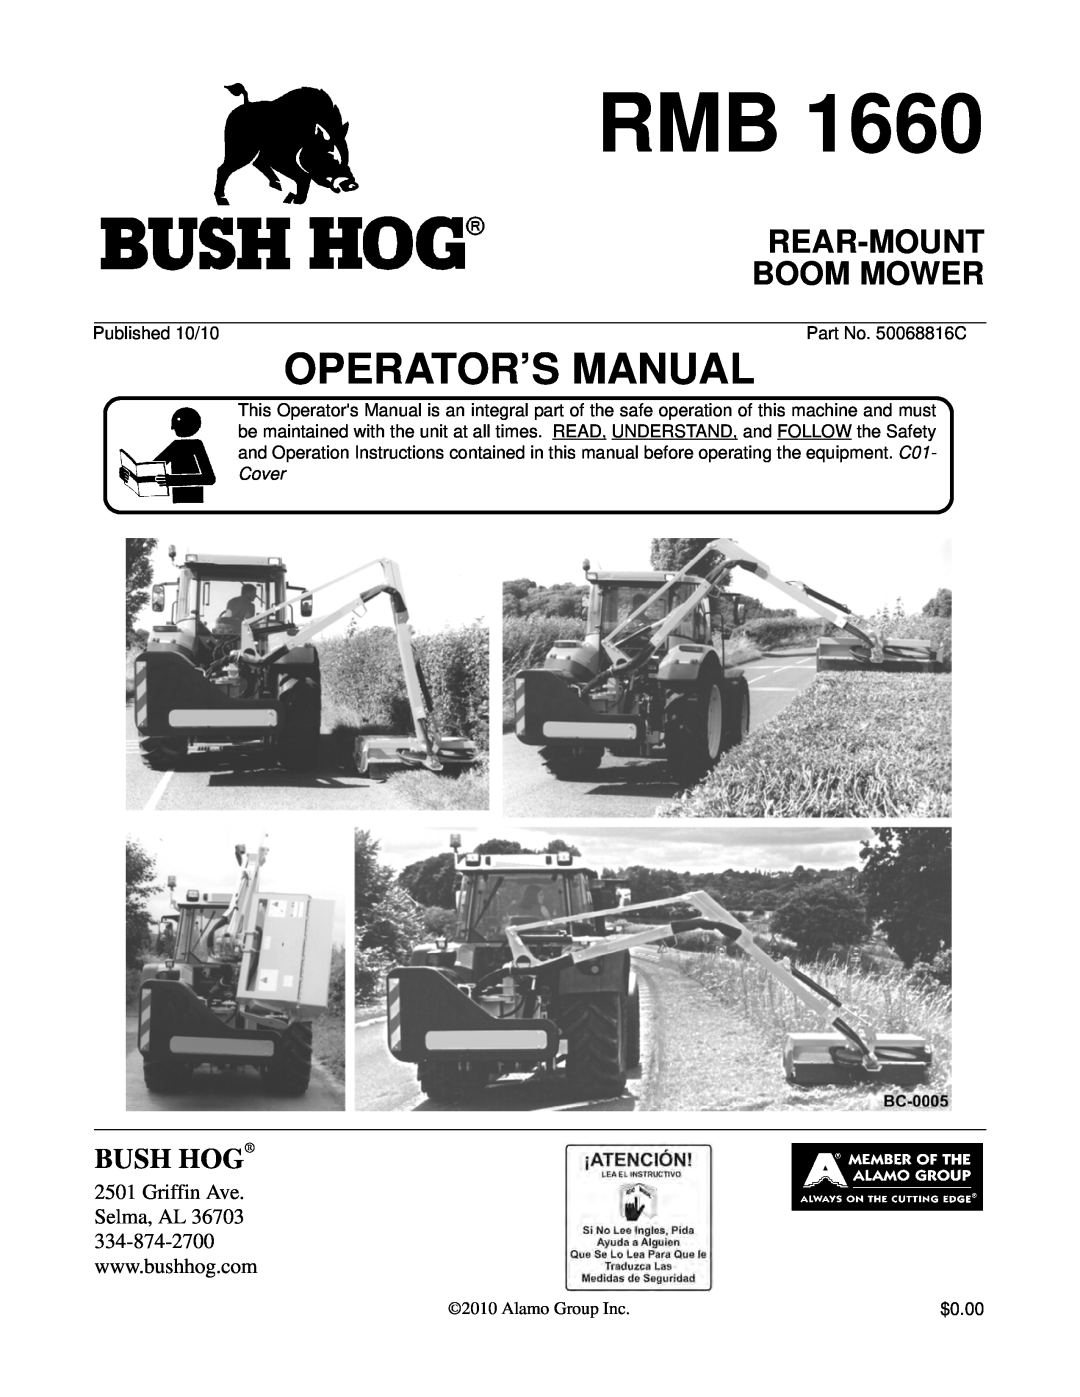 Bush Hog RMB 1660 manual Rear-Mount Boom Mower, Operator’S Manual, Bush Hog 